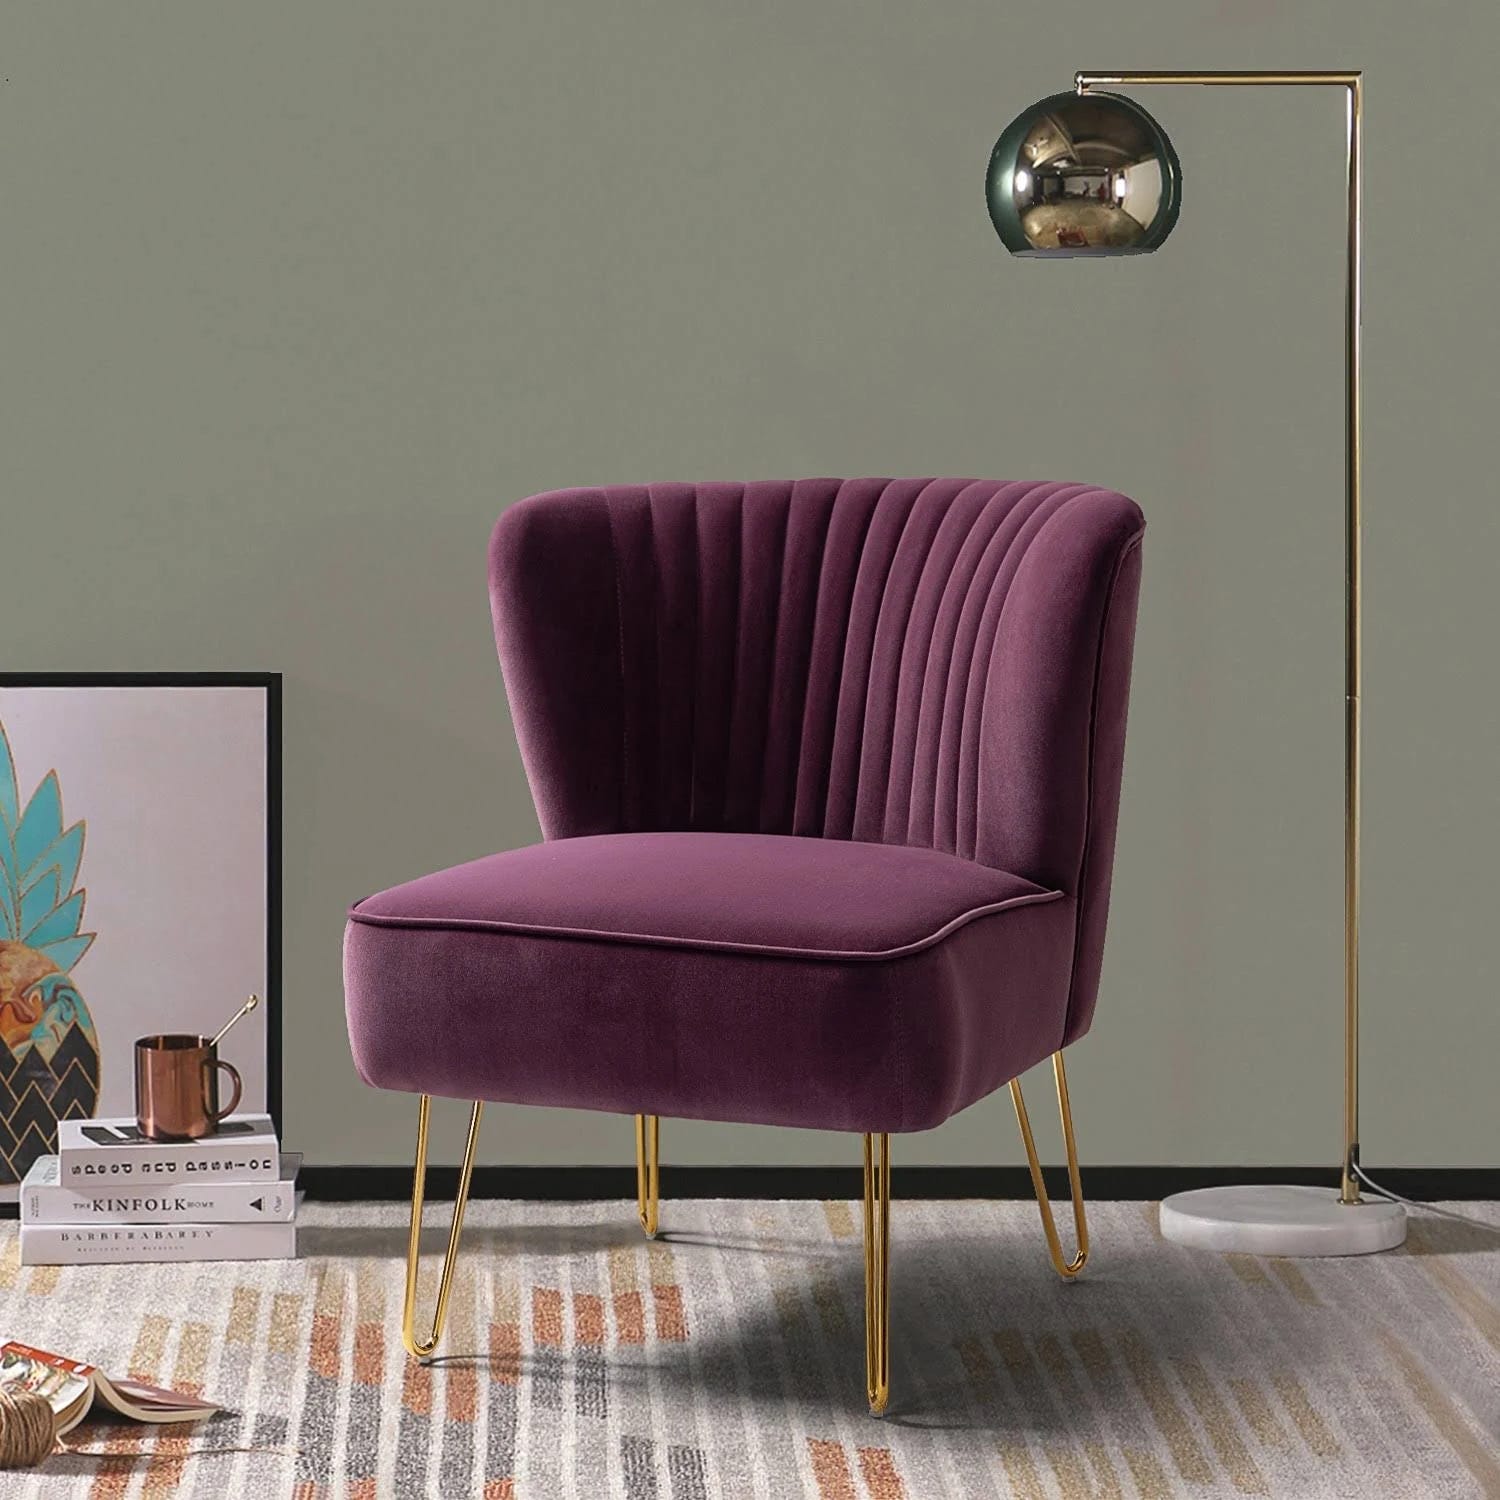 Velvet Purple Accent Sofa Chair with Golden Legs | Image